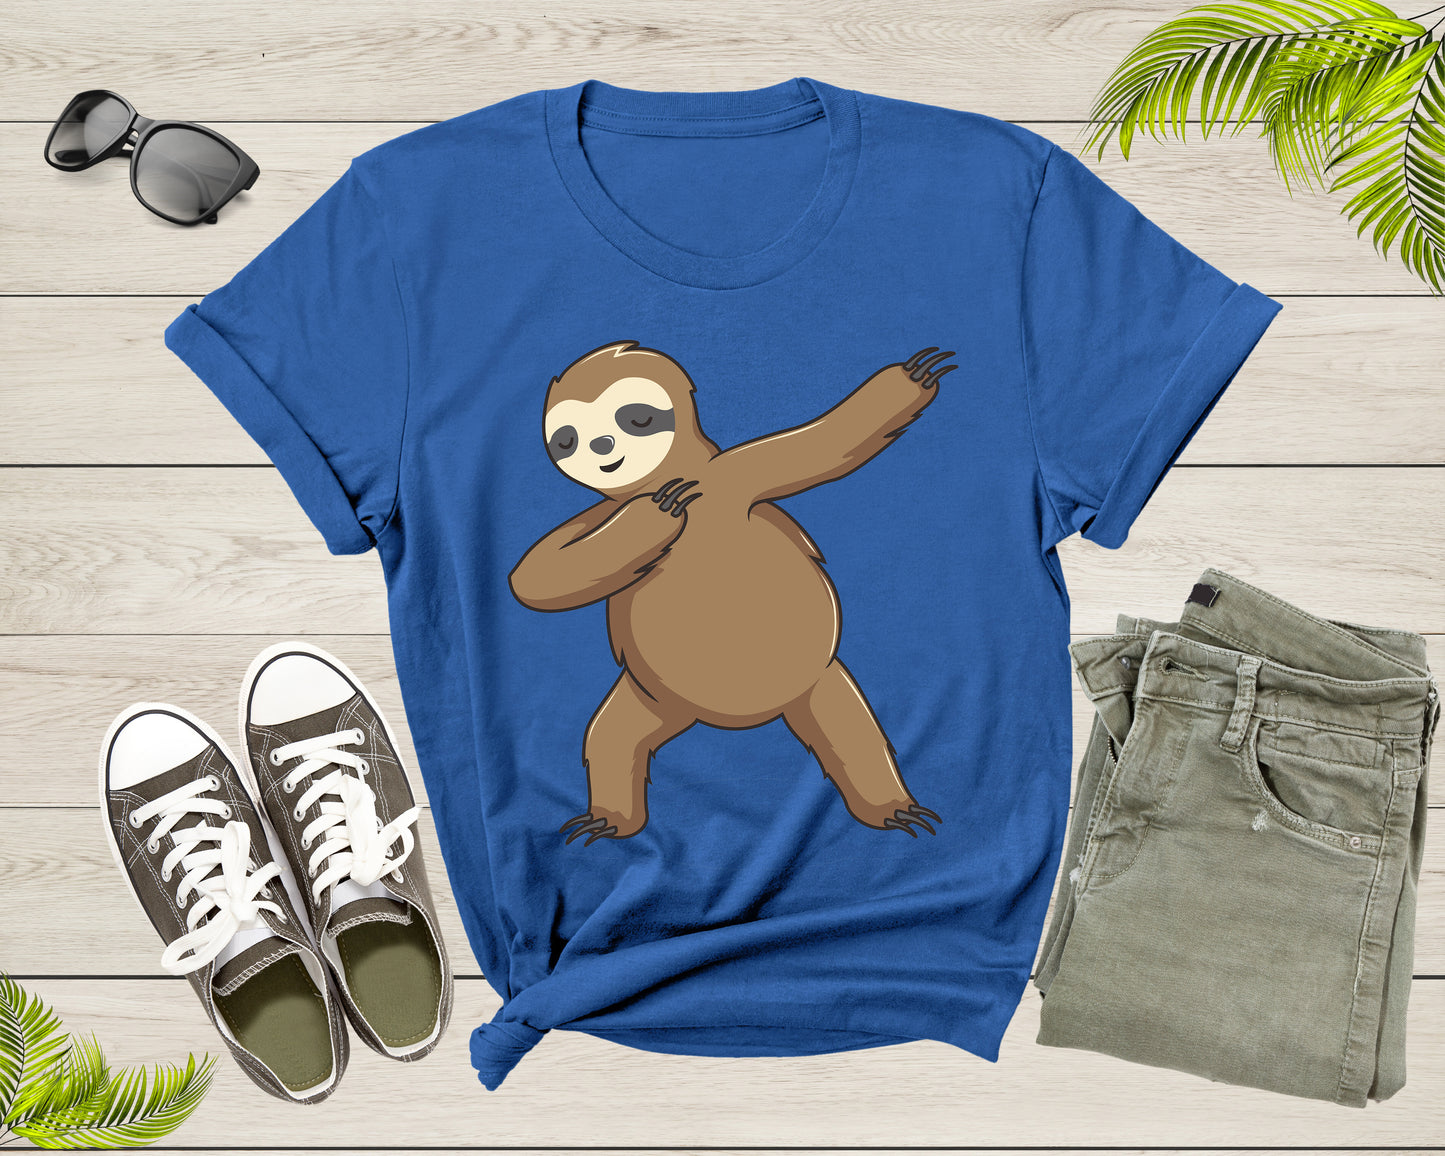 Cool Dabbing Dancing Lazy Sloth for Men Women Kids Boys Girl T-Shirt Sloth Animal Shirt for Men Women Kids Boys Girls Teens Gift Tshirt